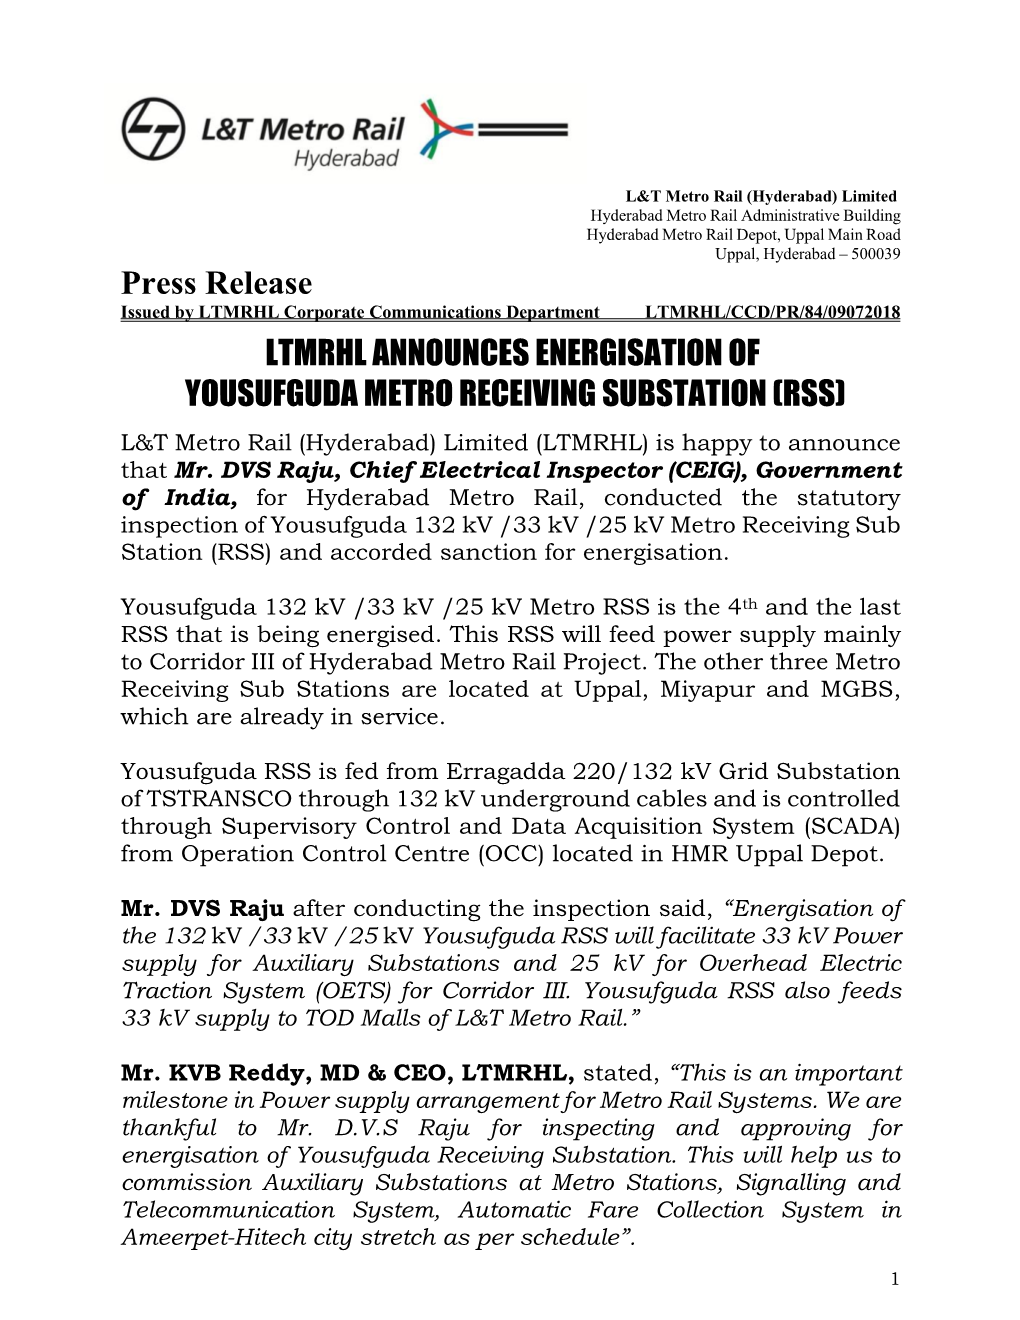 Press Release LTMRHL ANNOUNCES ENERGISATION OF